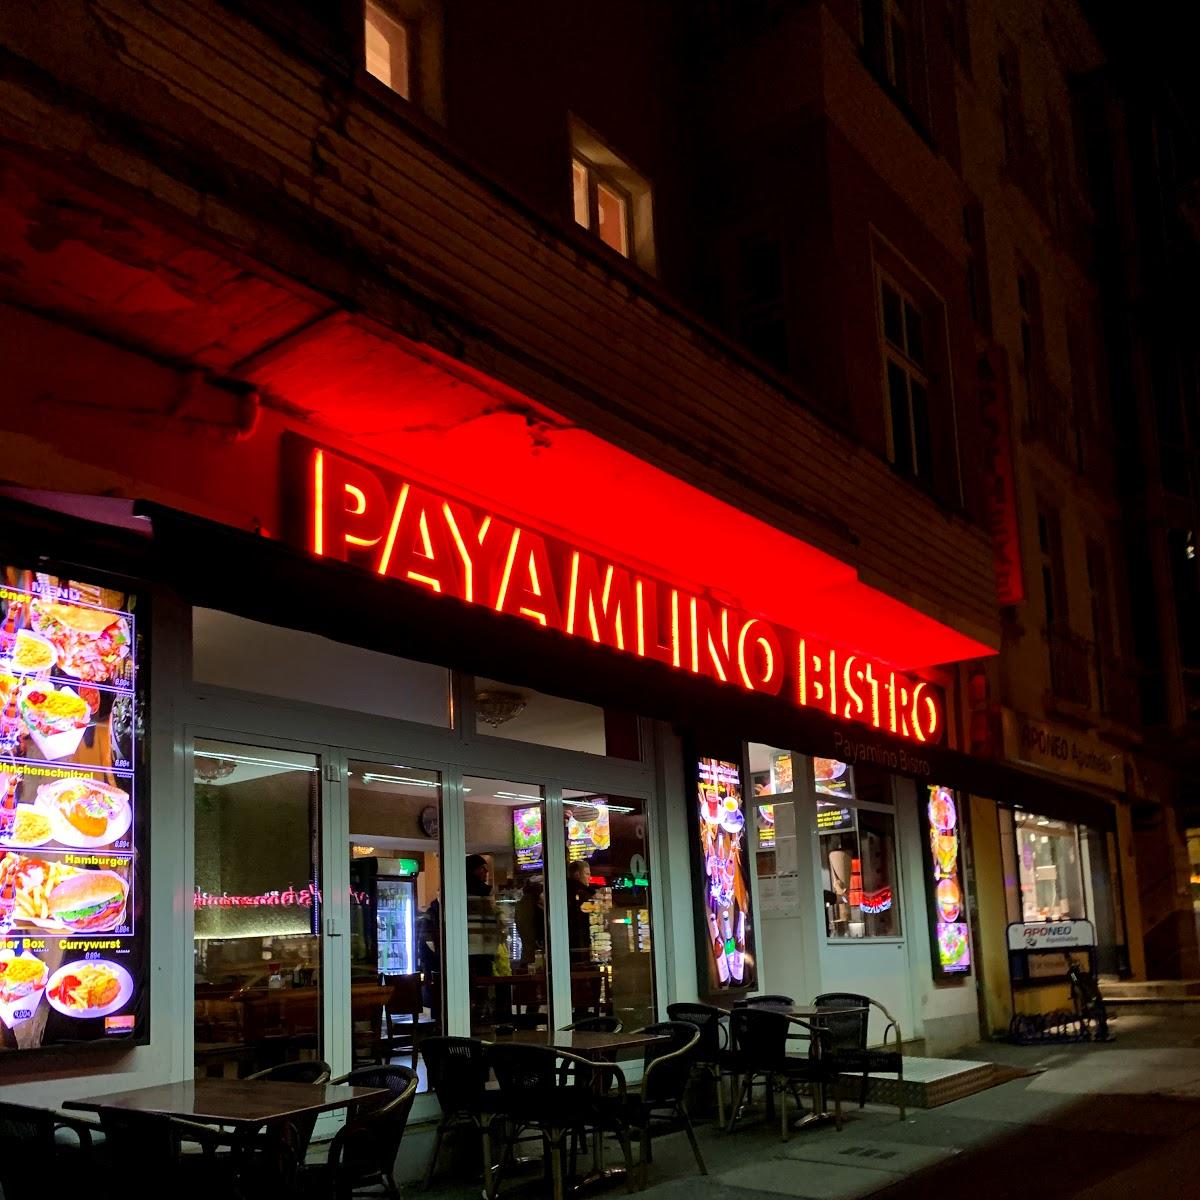 Restaurant "Payamlino Bistro" in Berlin